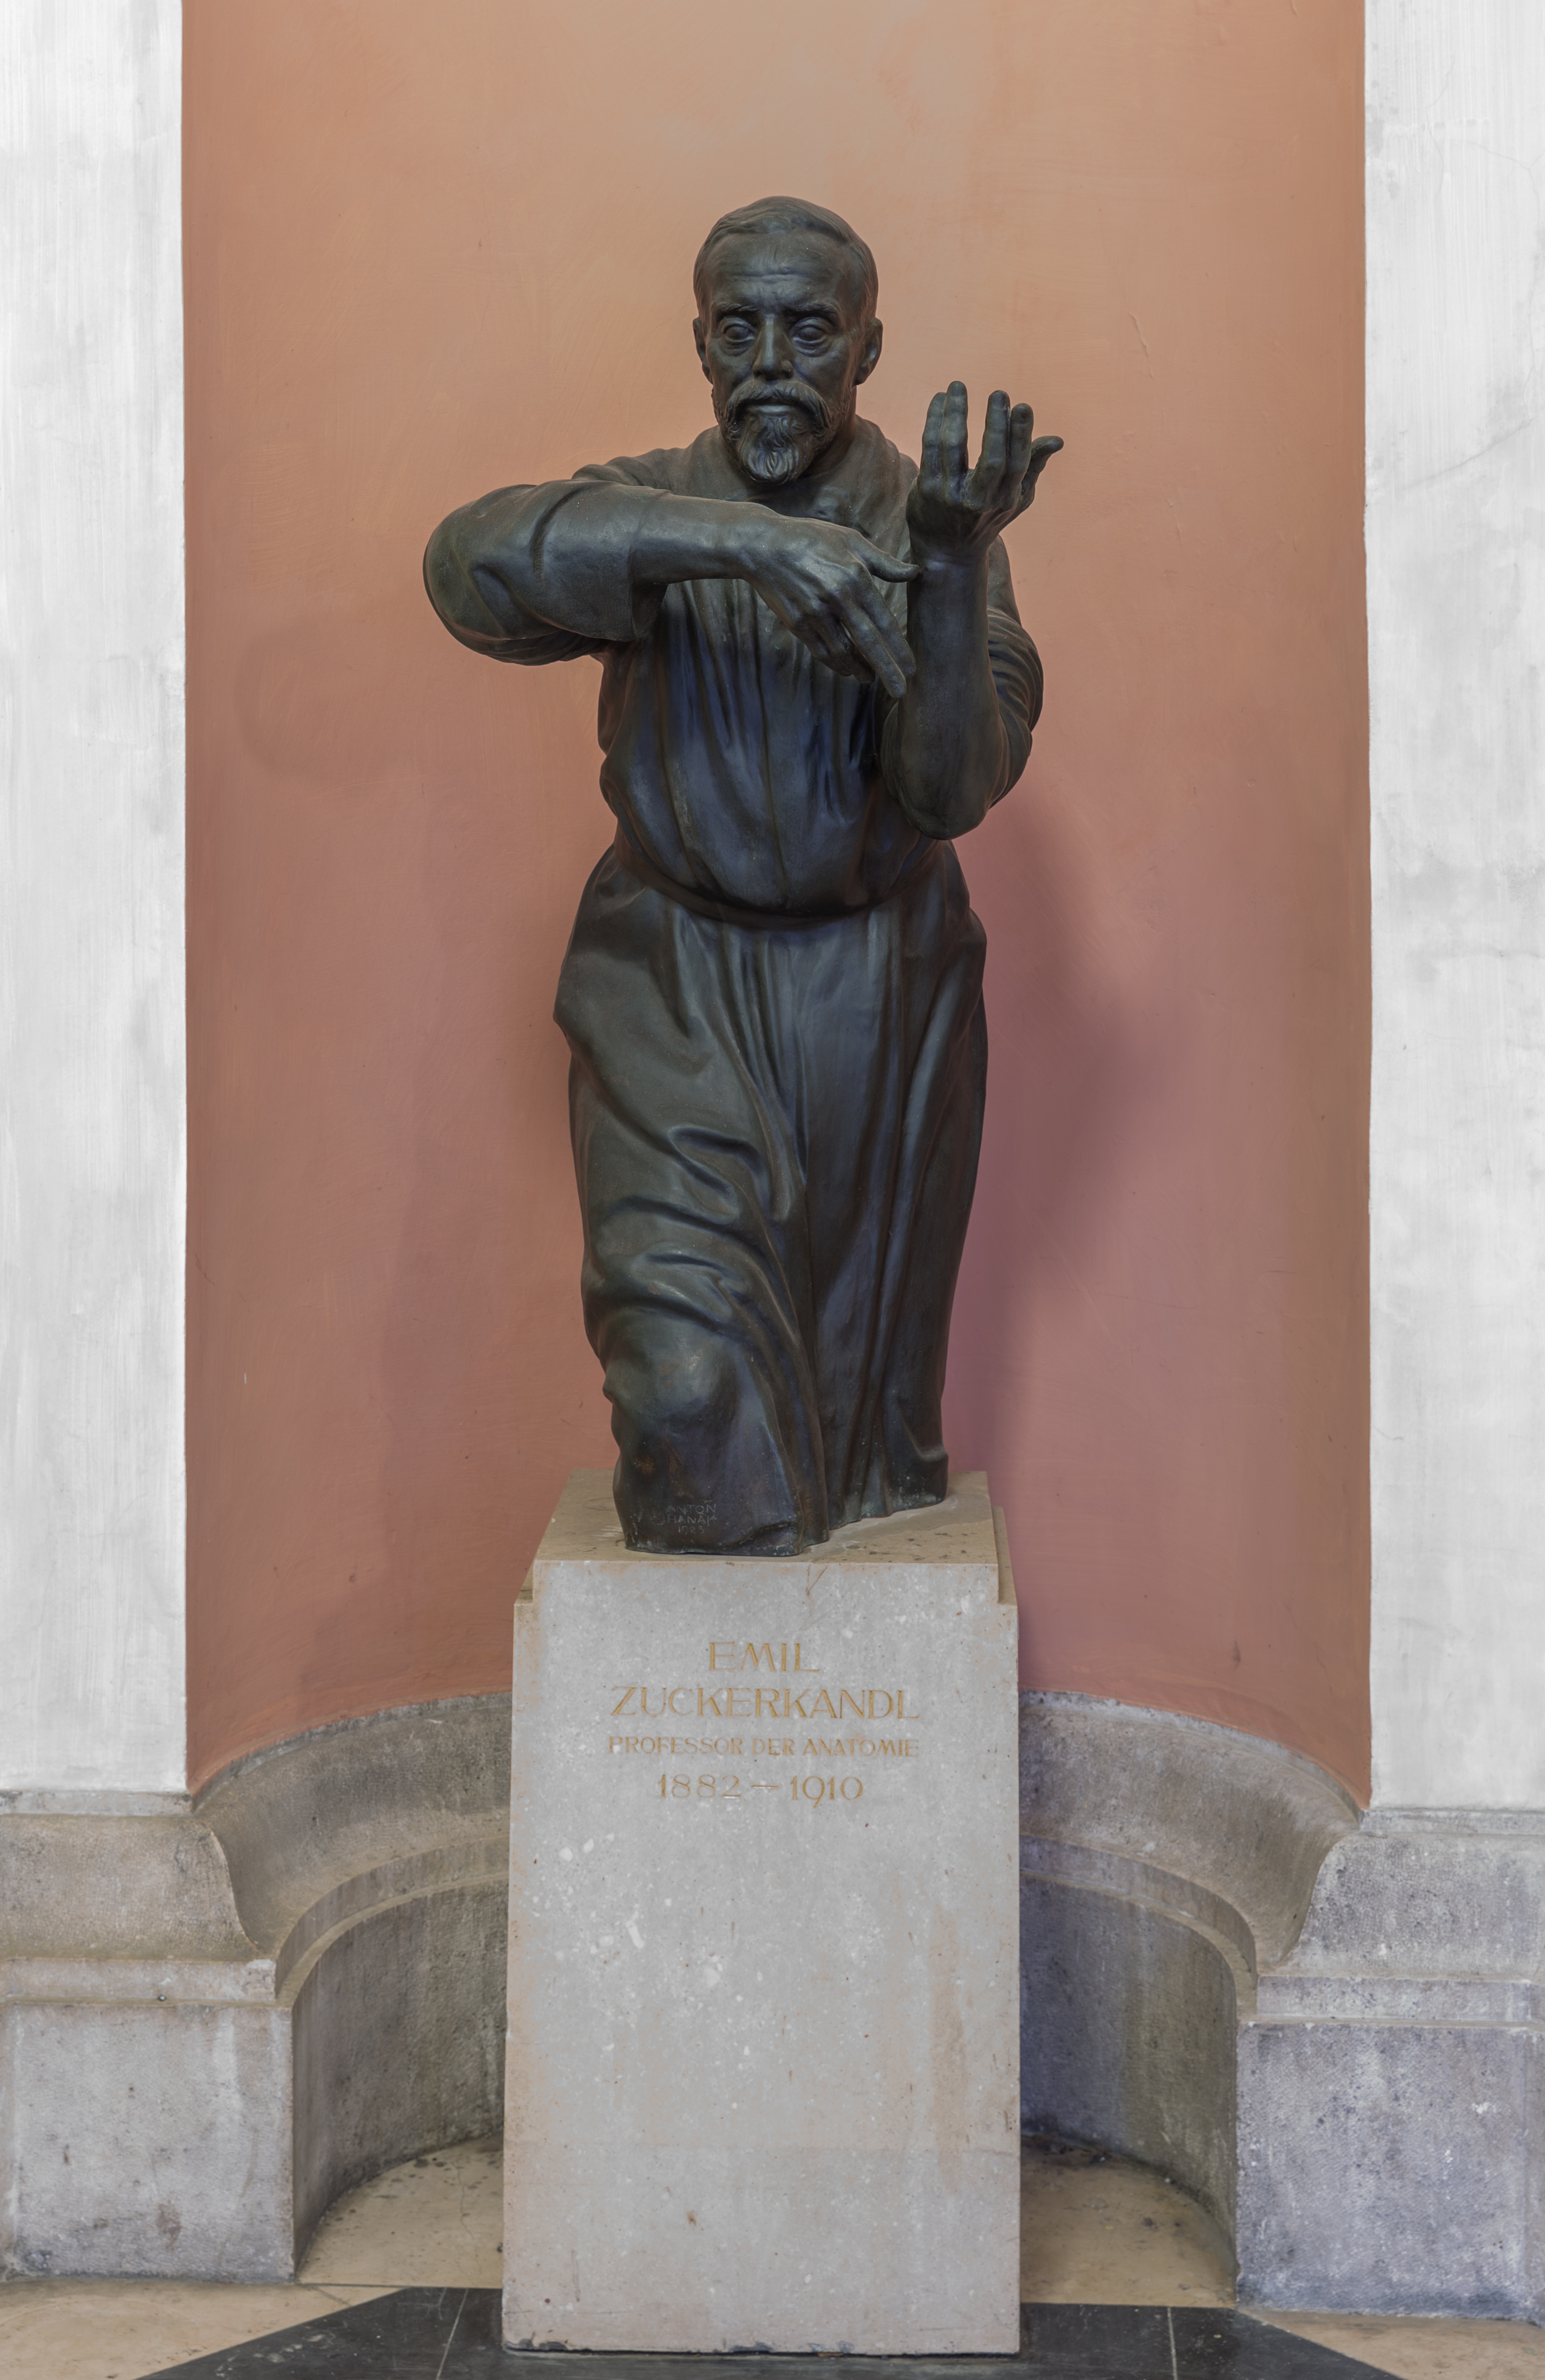 Emil Zuckerkandl (1849-1910), figure (bronce) Nr. 85 in the Arkadenhof of the University of Vienna-2012